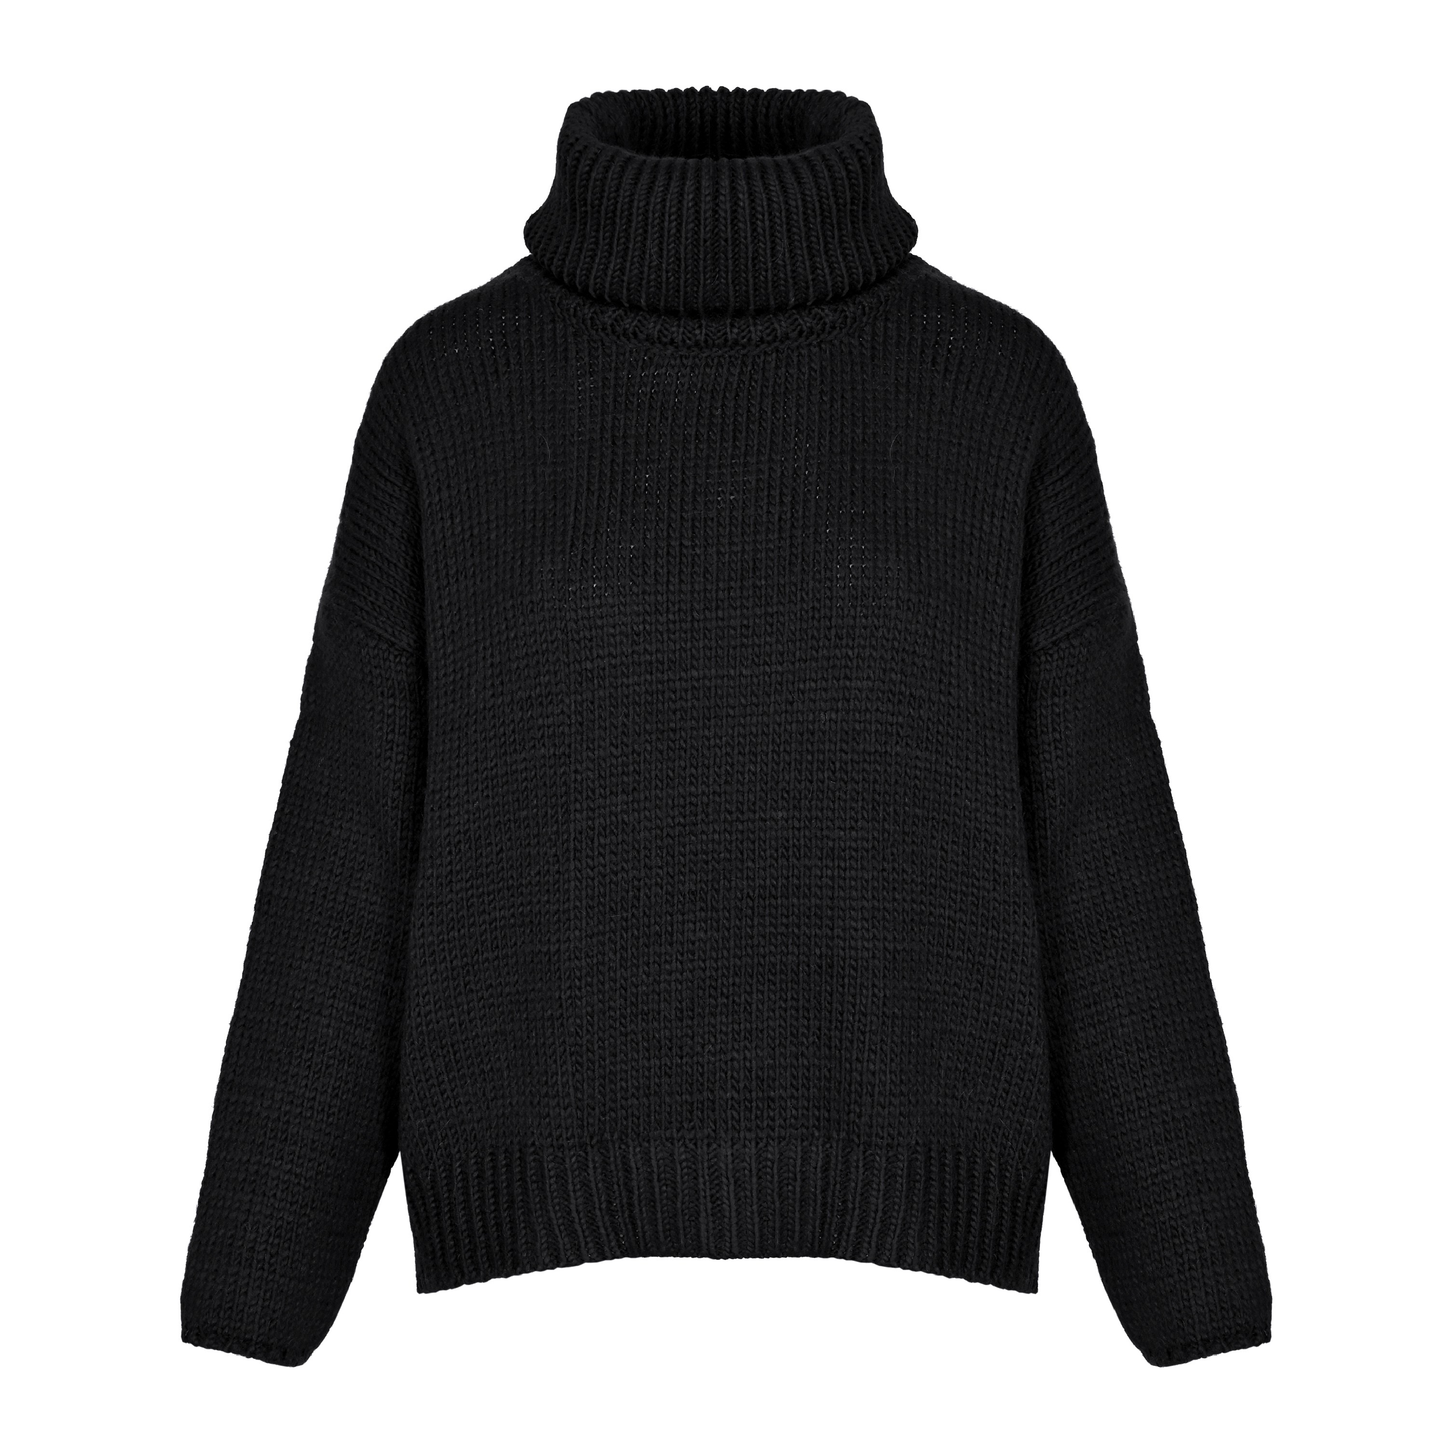 Oven Black sweater